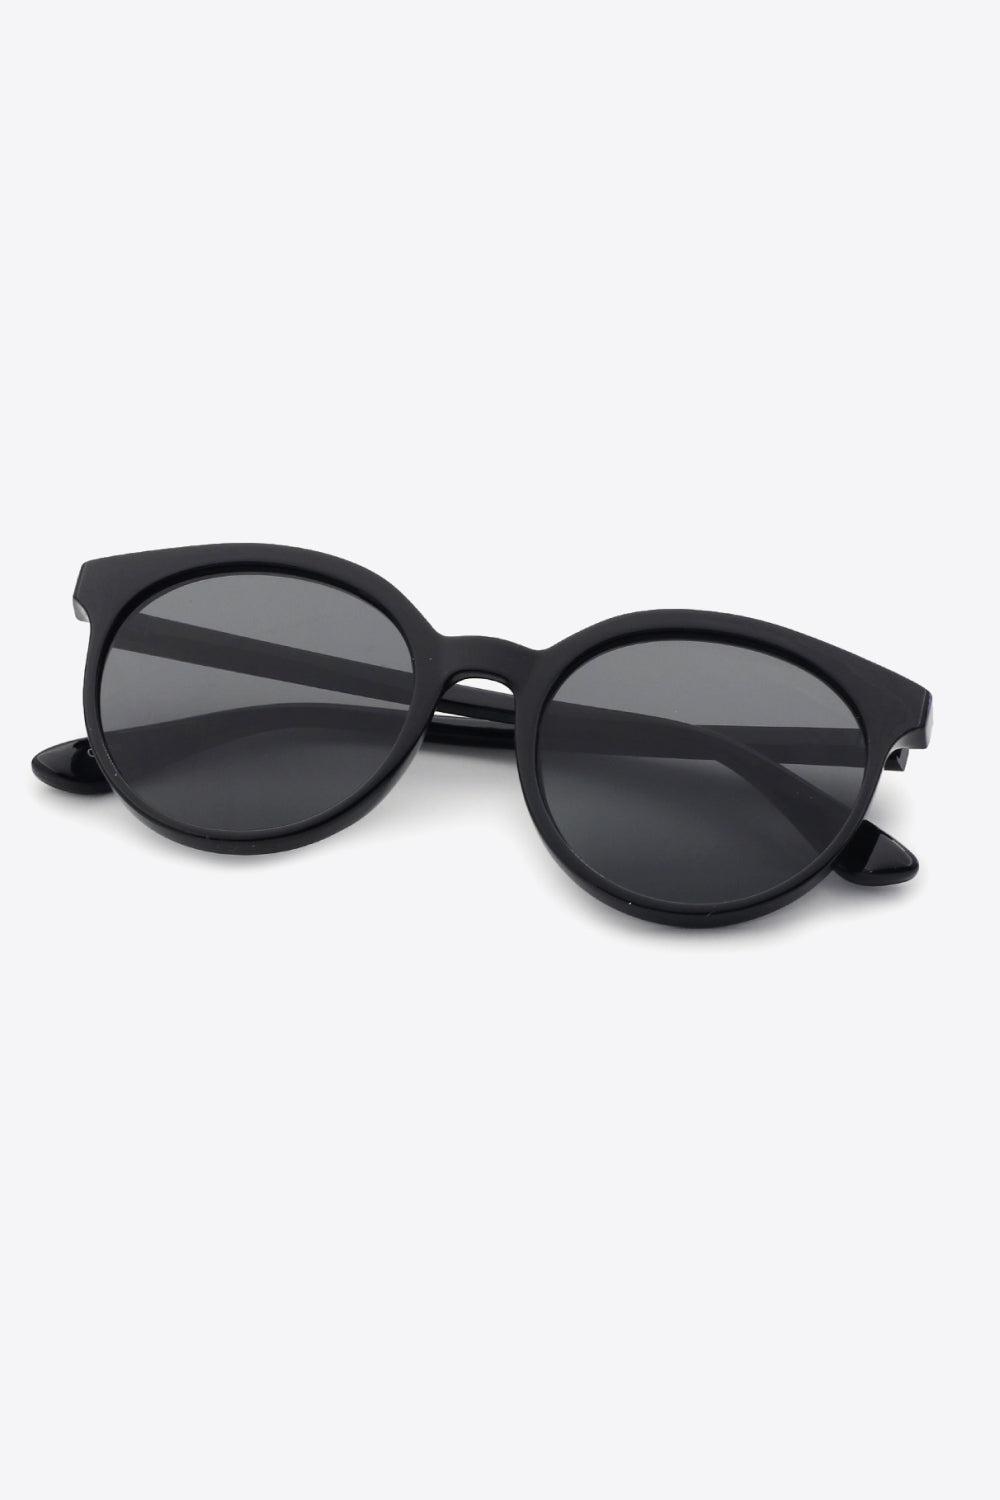 Women’s Round Full Rim Polycarbonate Frame Sunglasses